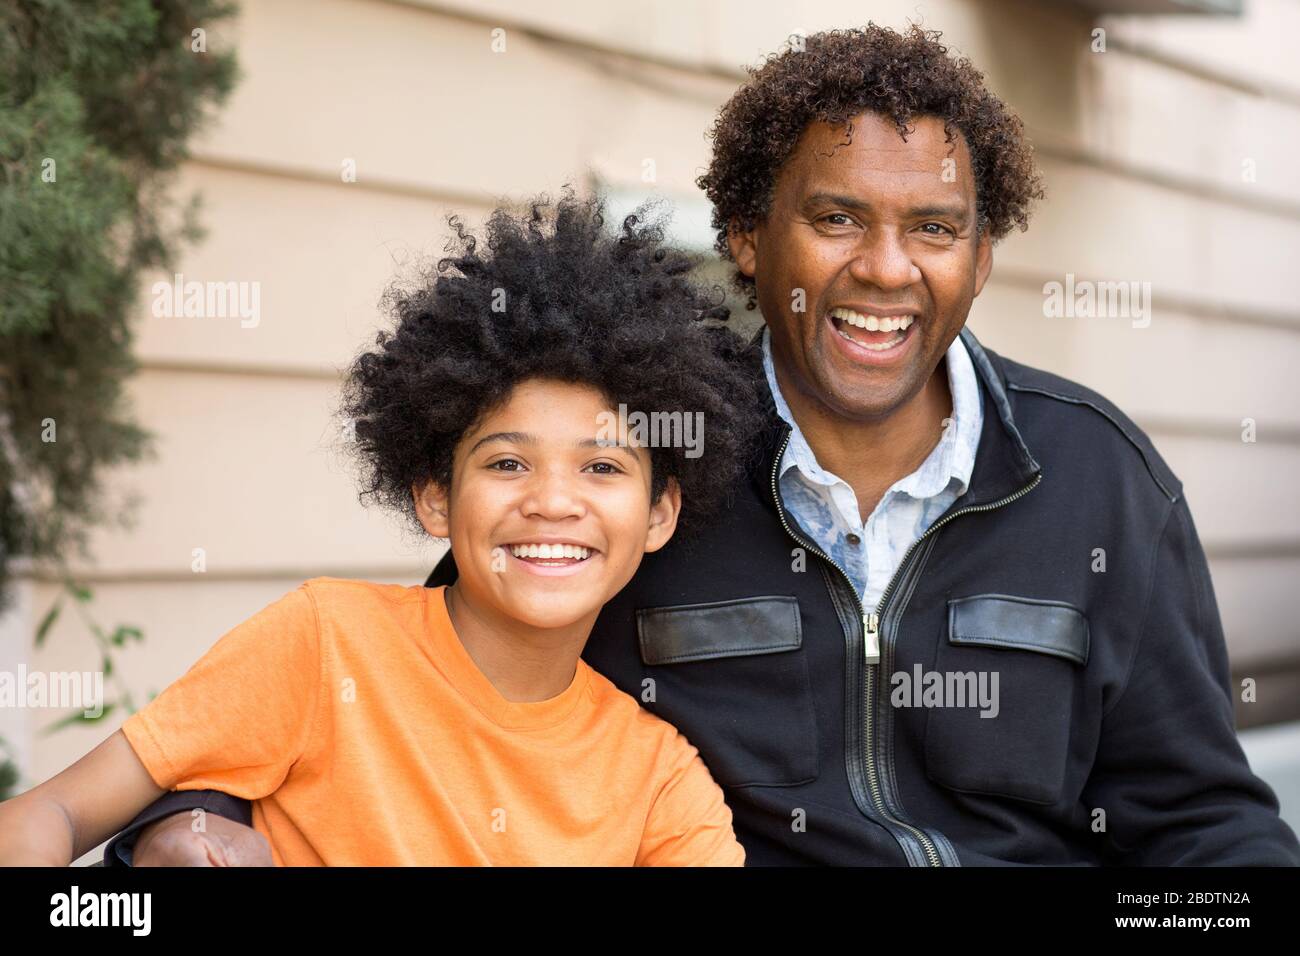 African American father hugging son fils et sourit. Banque D'Images